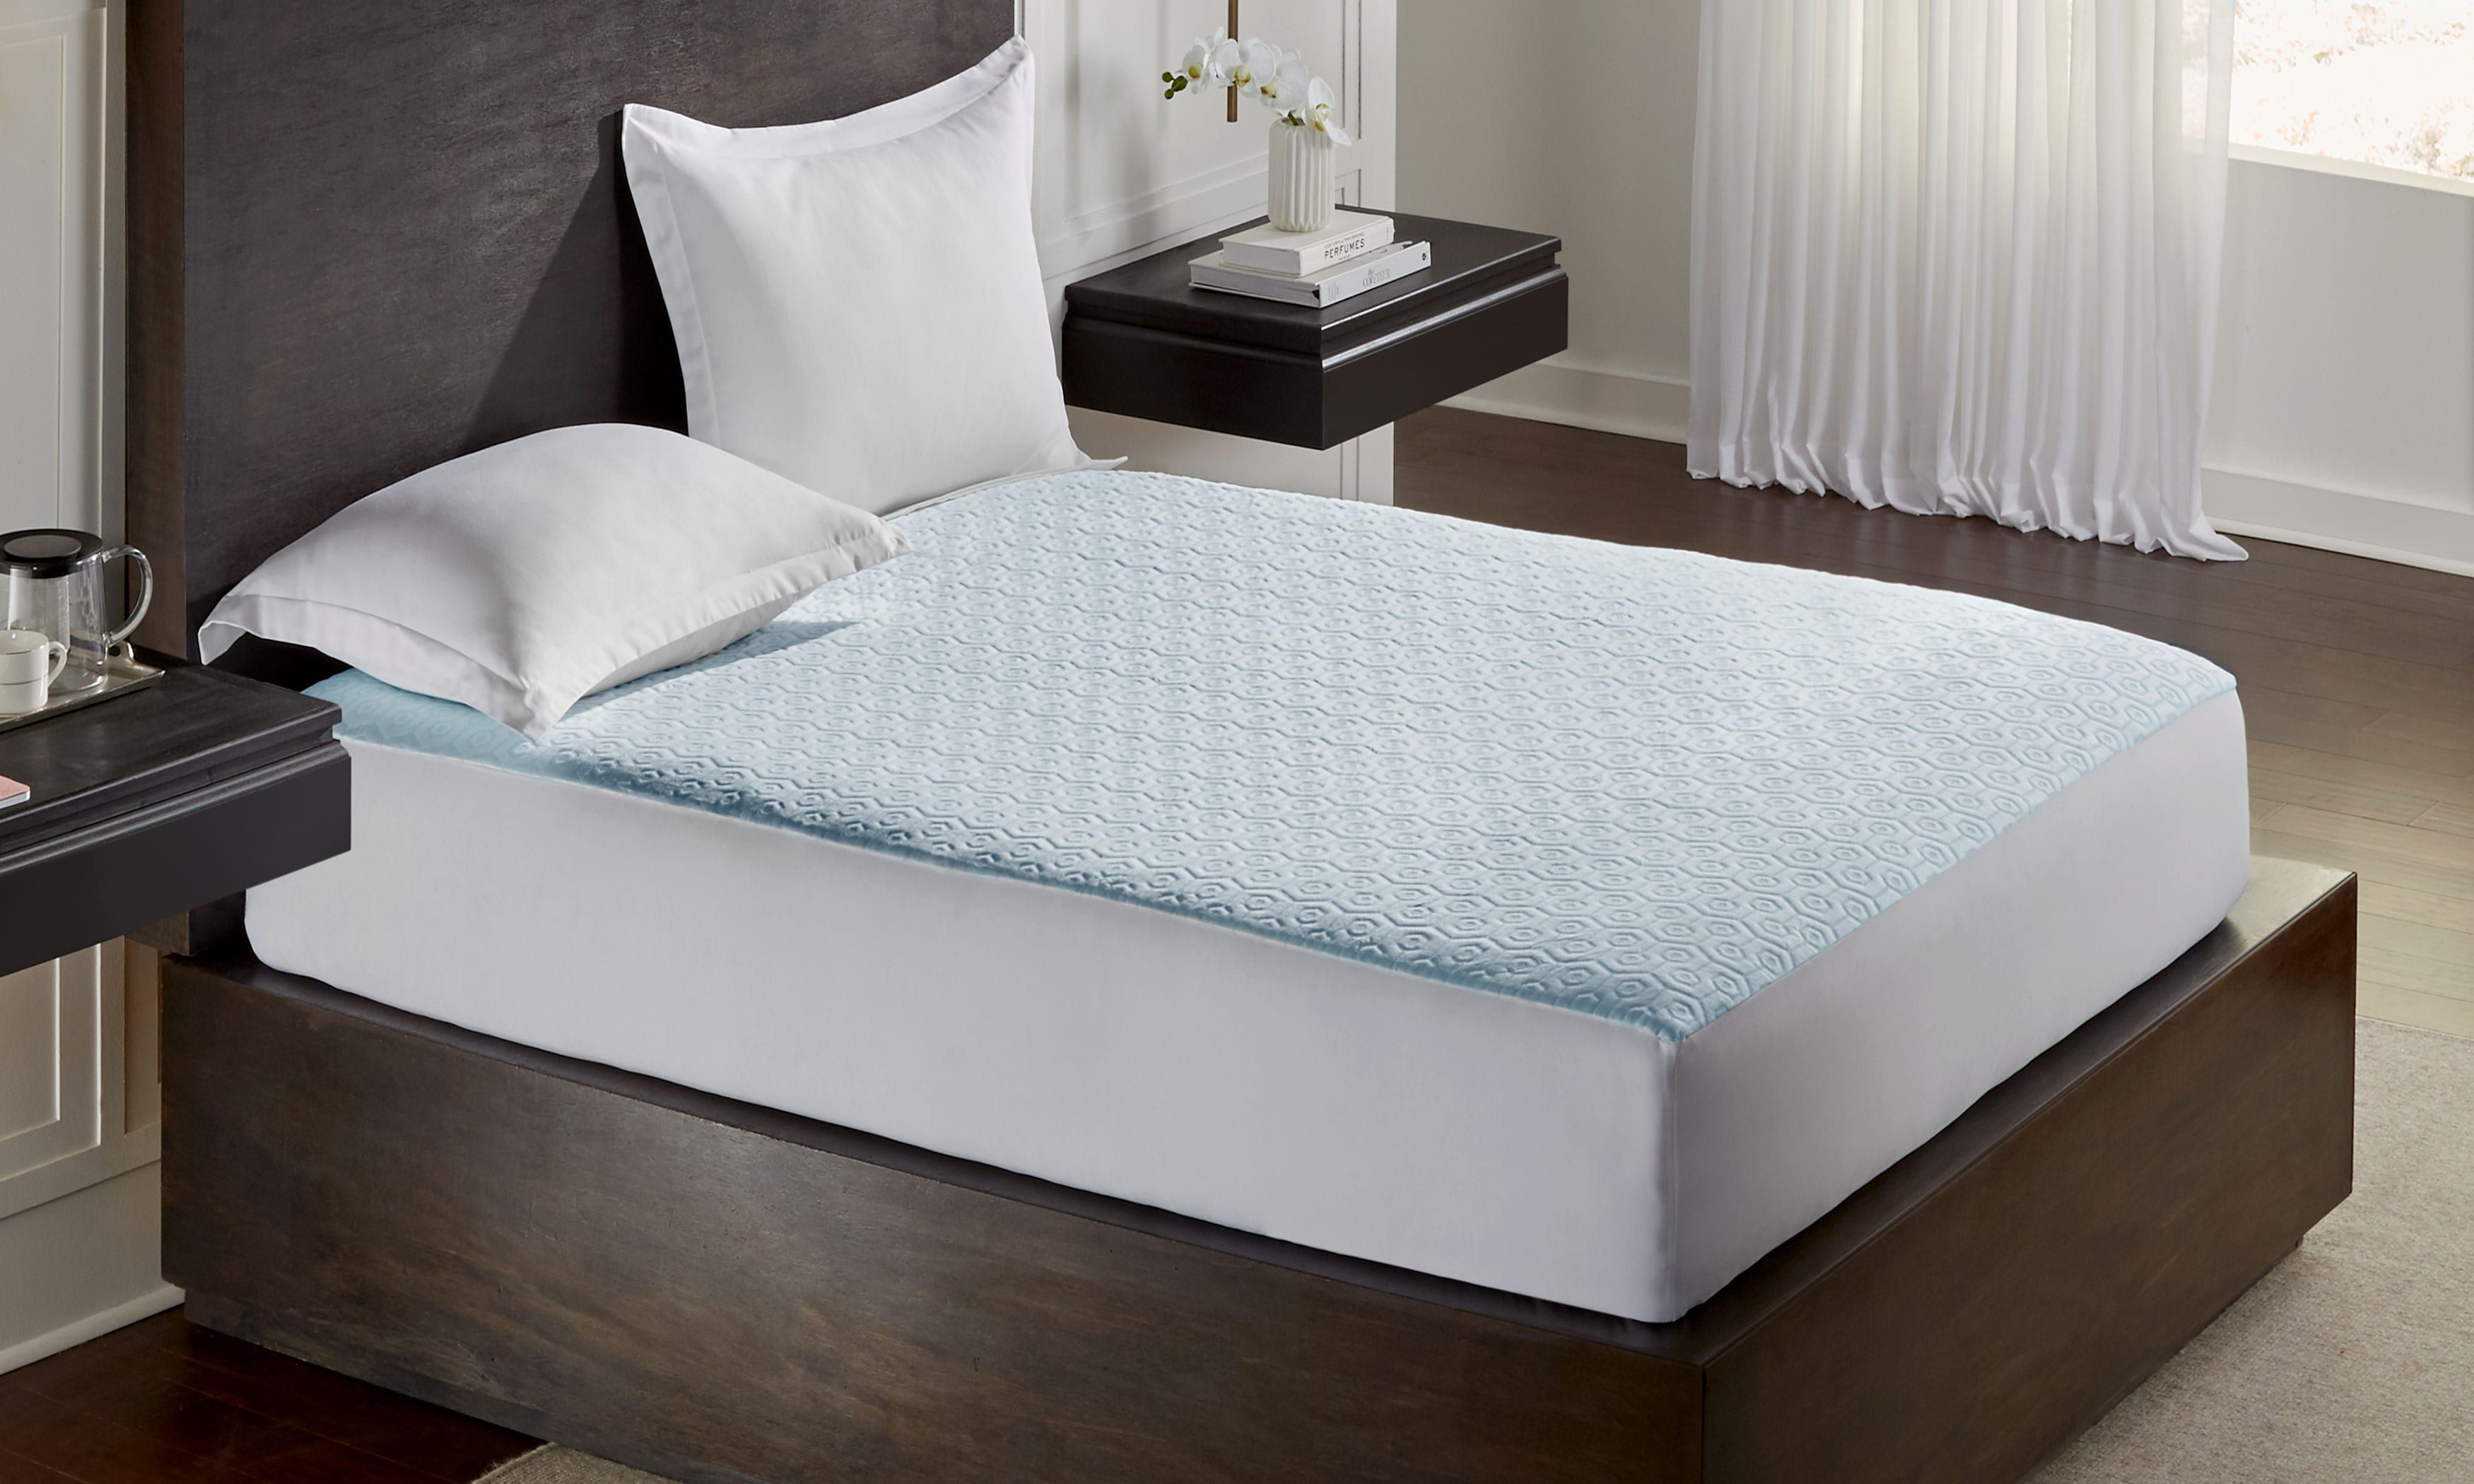 3 cooling gel foam mattress pad